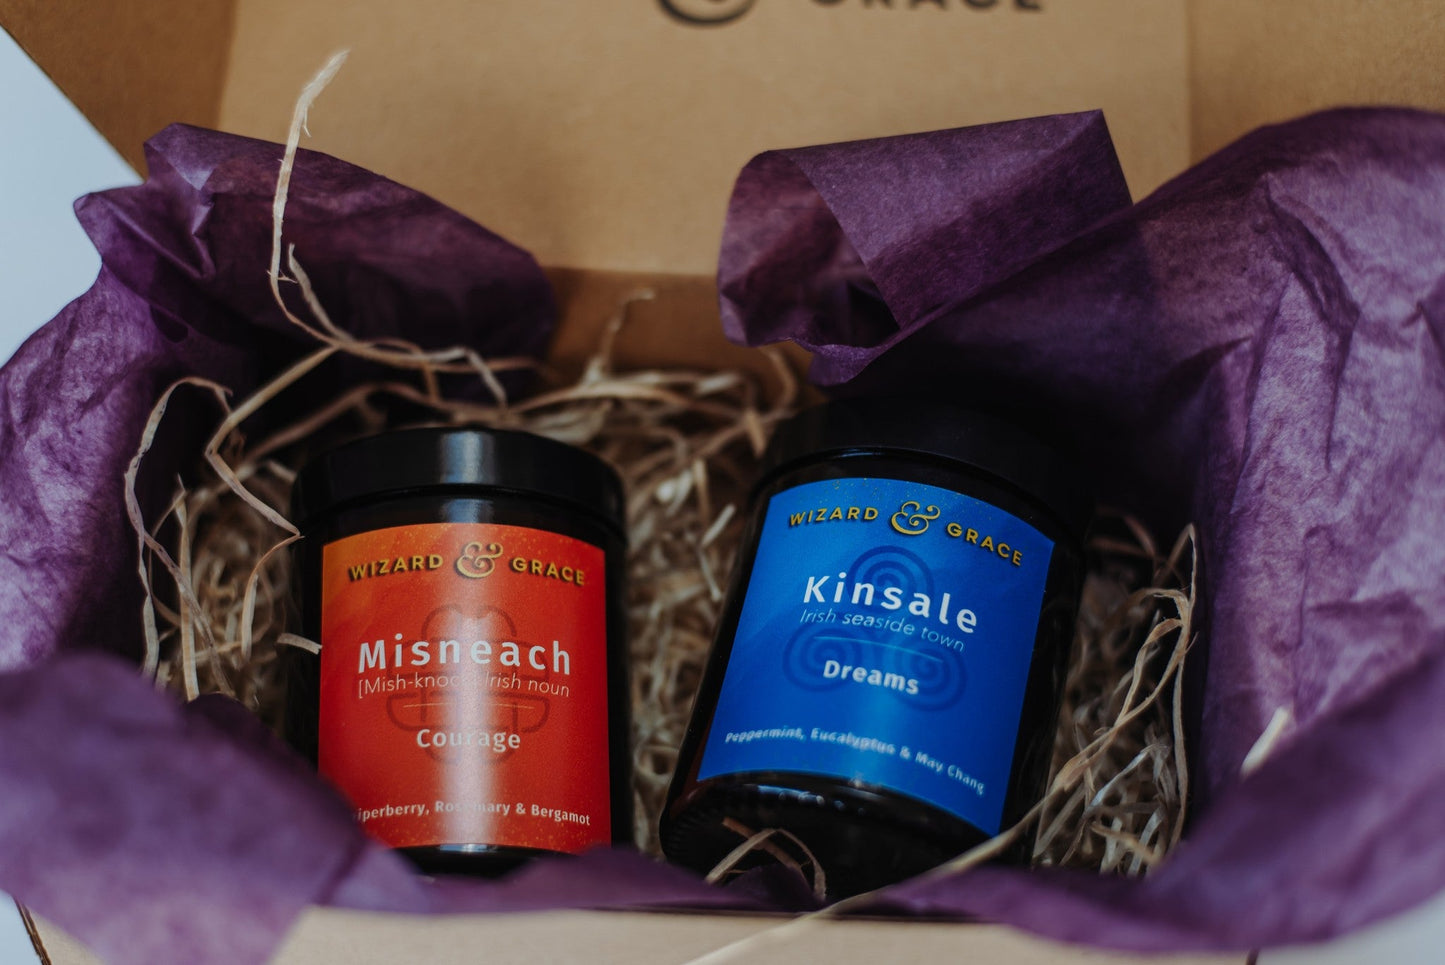 Kinsale (Dreams) Essential Oil Candle - Wizard & Grace